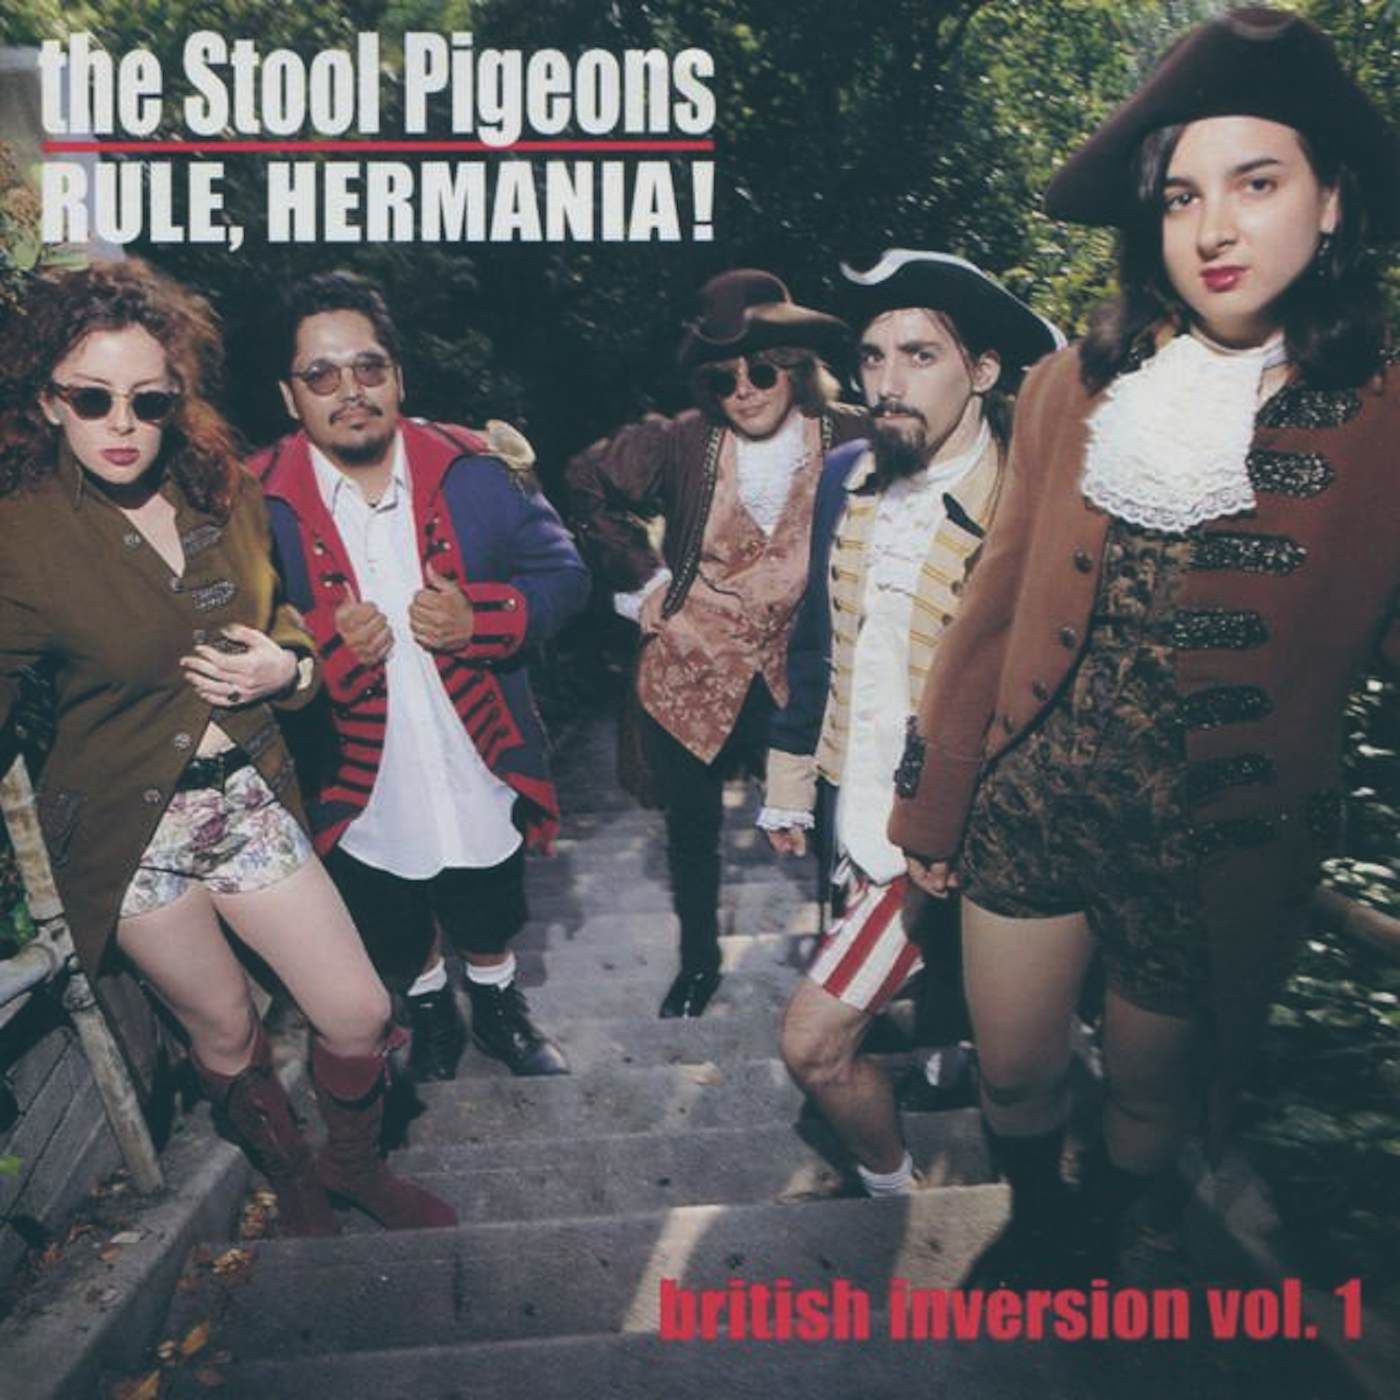 The Stool Pigeons